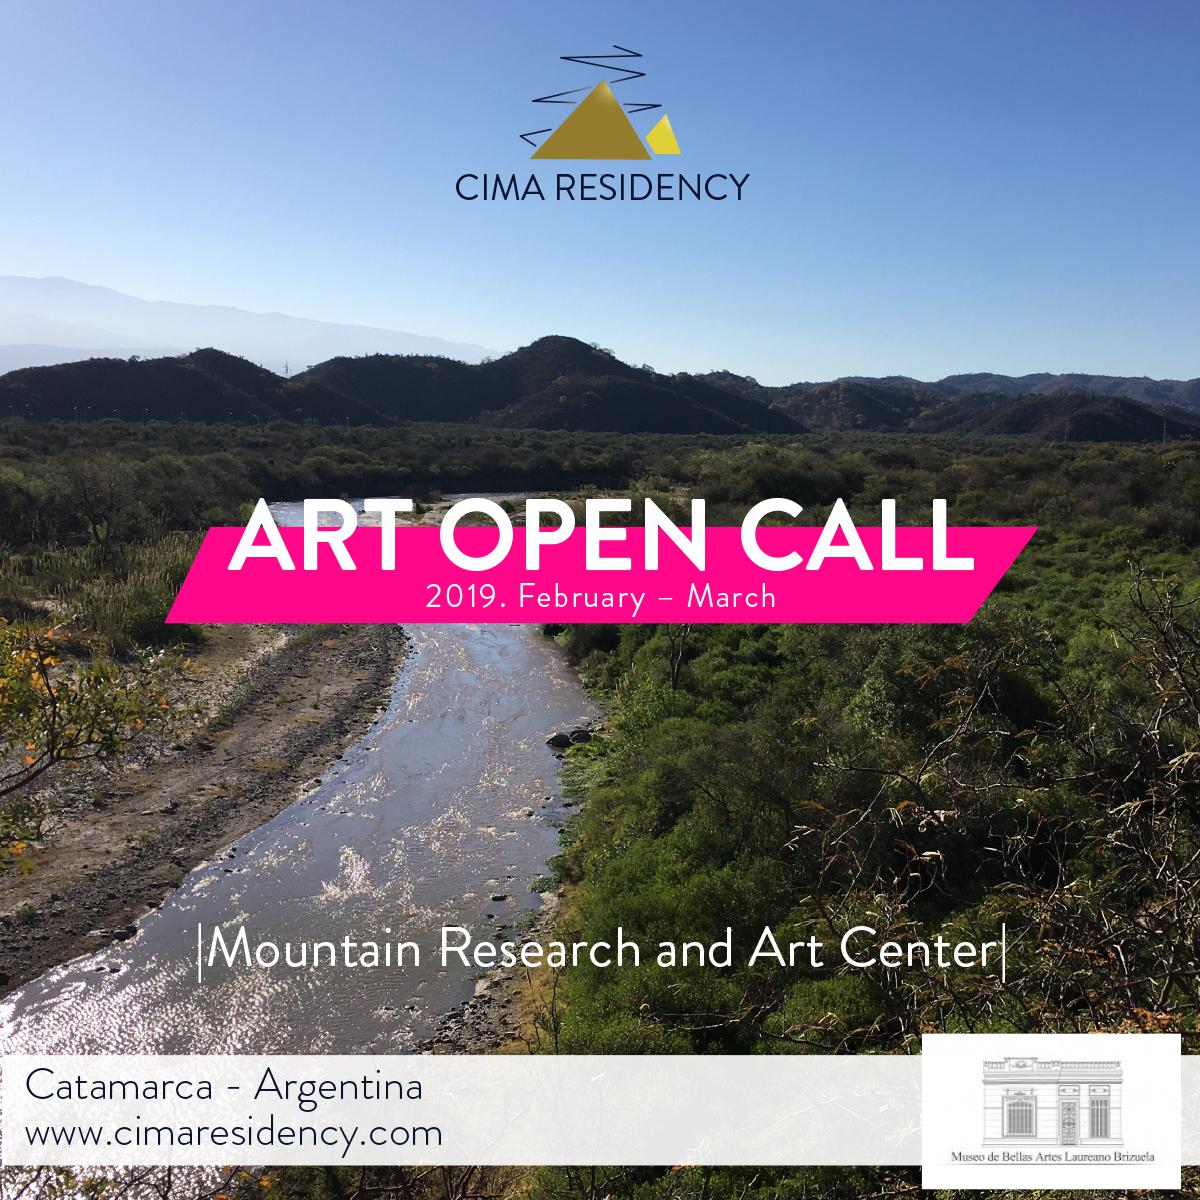 CIMA RESIDENCY ART/NATURE OPEN CALL